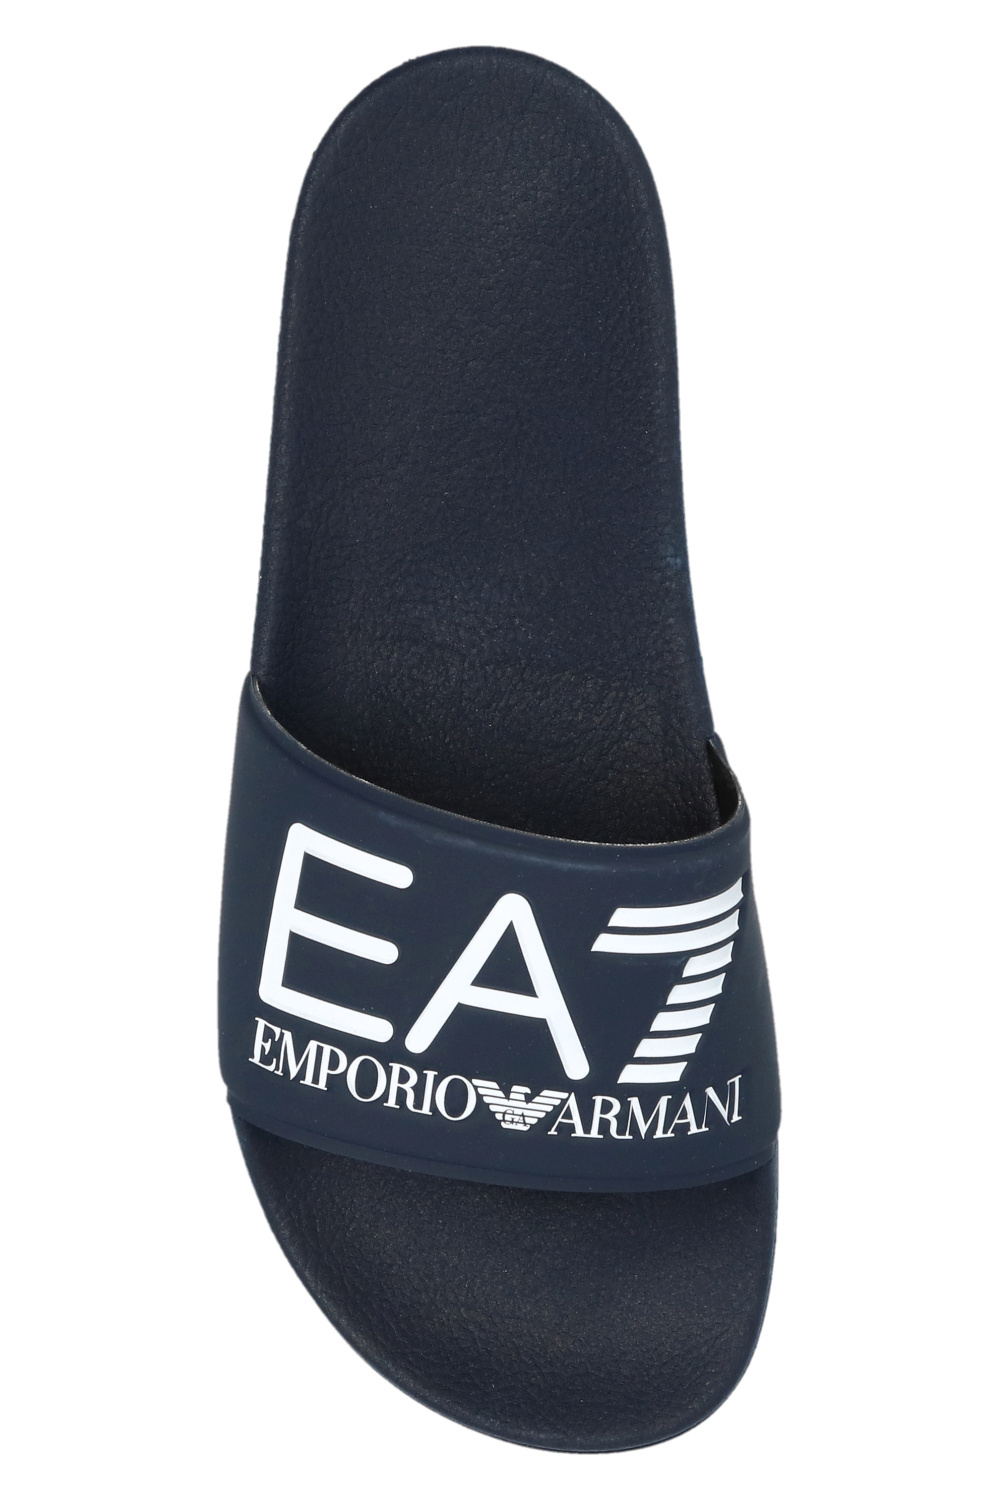 EA7 Emporio Armani Slides with logo